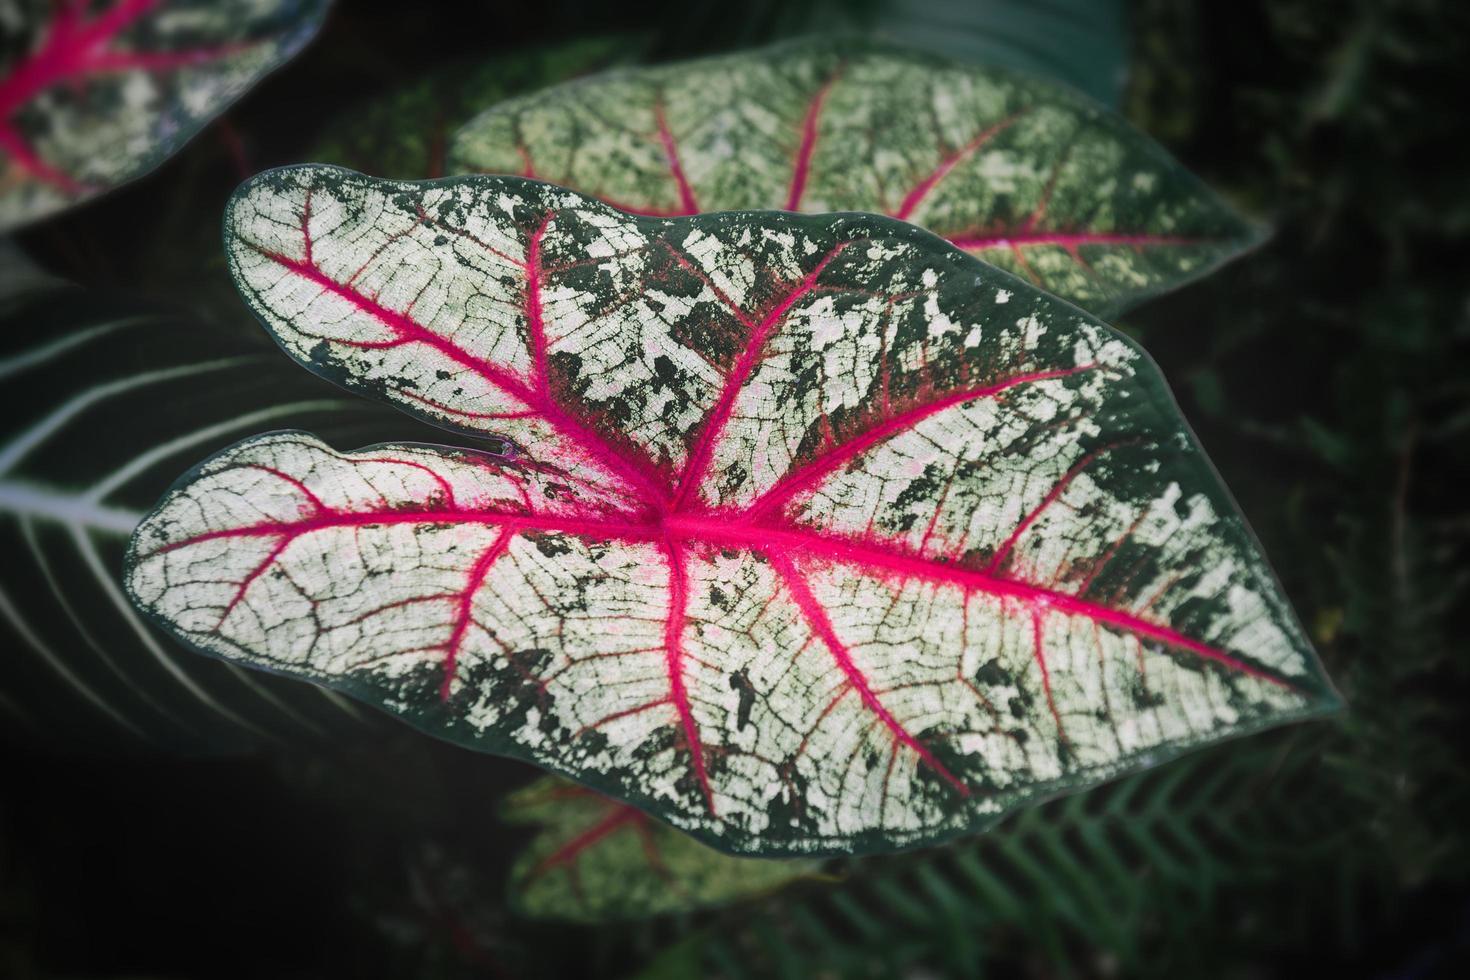 caladium bicolor blad träd med inomhus låg belysning. foto